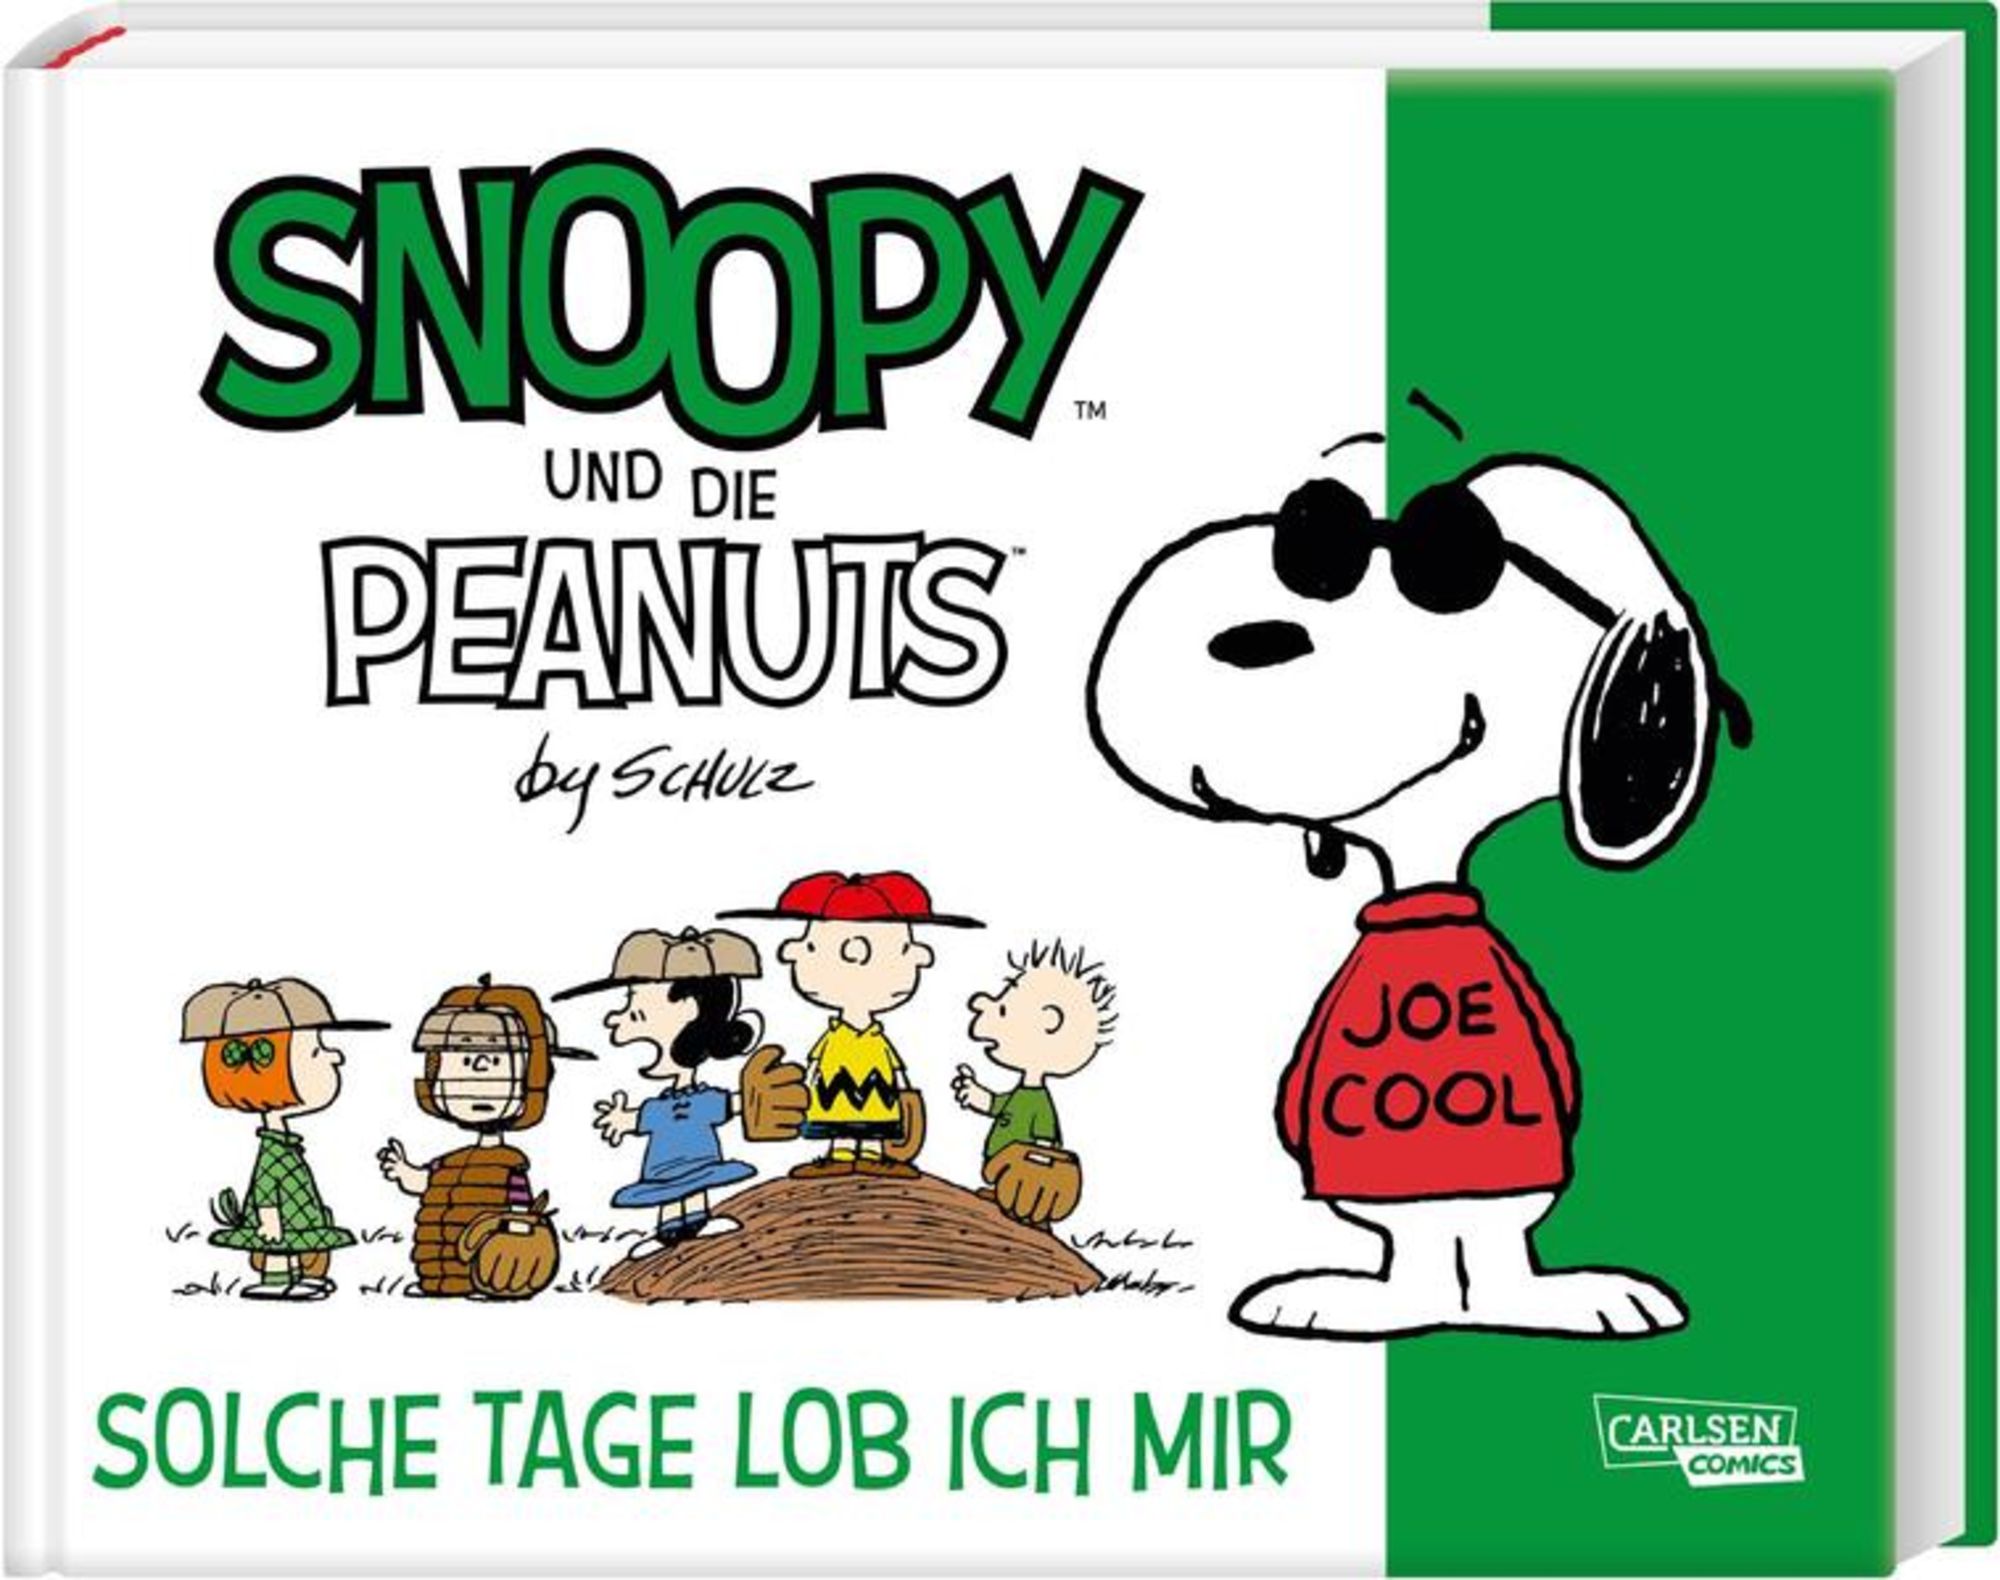 https://images.thalia.media/-/BF2000-2000/986a74a875724510890fc95908c39747/snoopy-und-die-peanuts-3-solche-tage-lob-ich-mir-taschenbuch-charles-m-schulz.jpeg